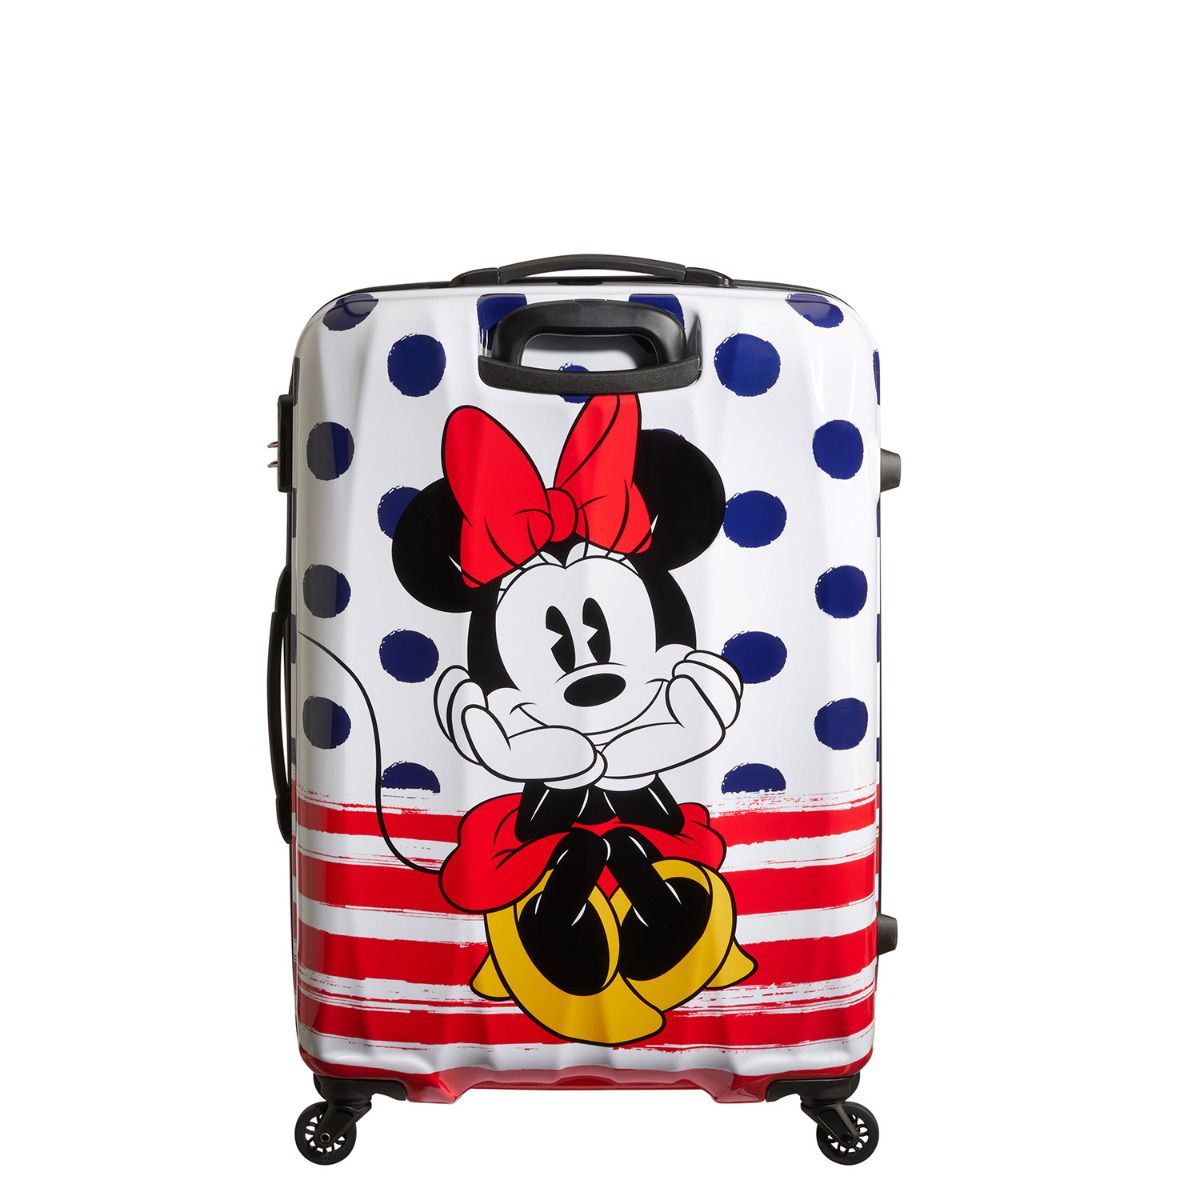 American Tourister Disney Legends Alfatwist Minnie Mouse 75 cm